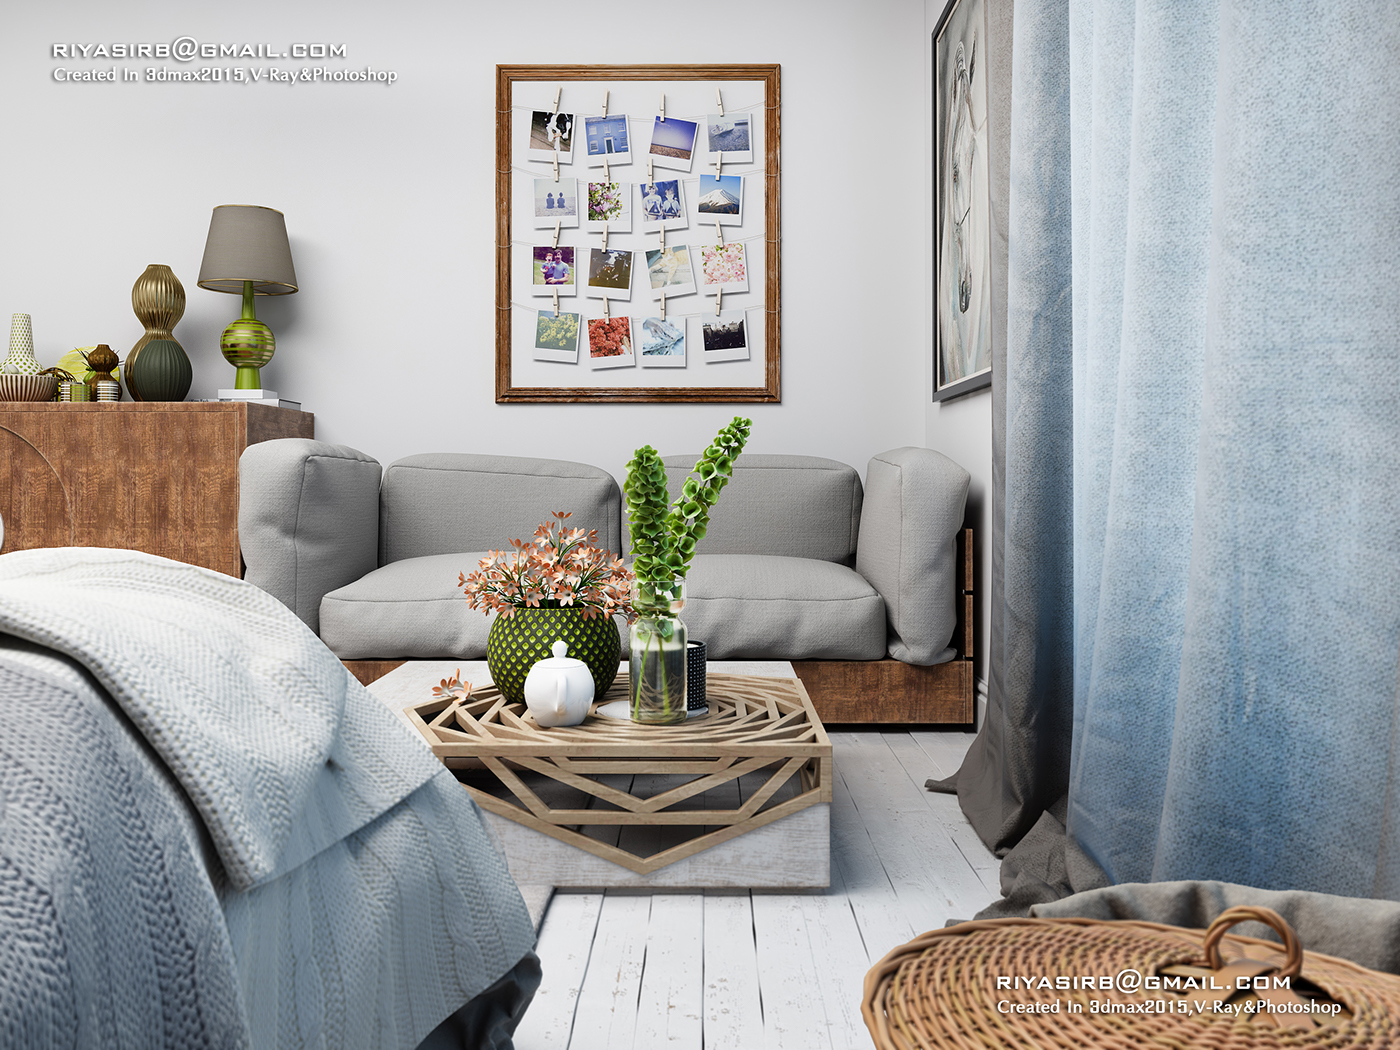 3dsmax vray bedroom visualization Render interiordesign dubai modern photoshop CGI